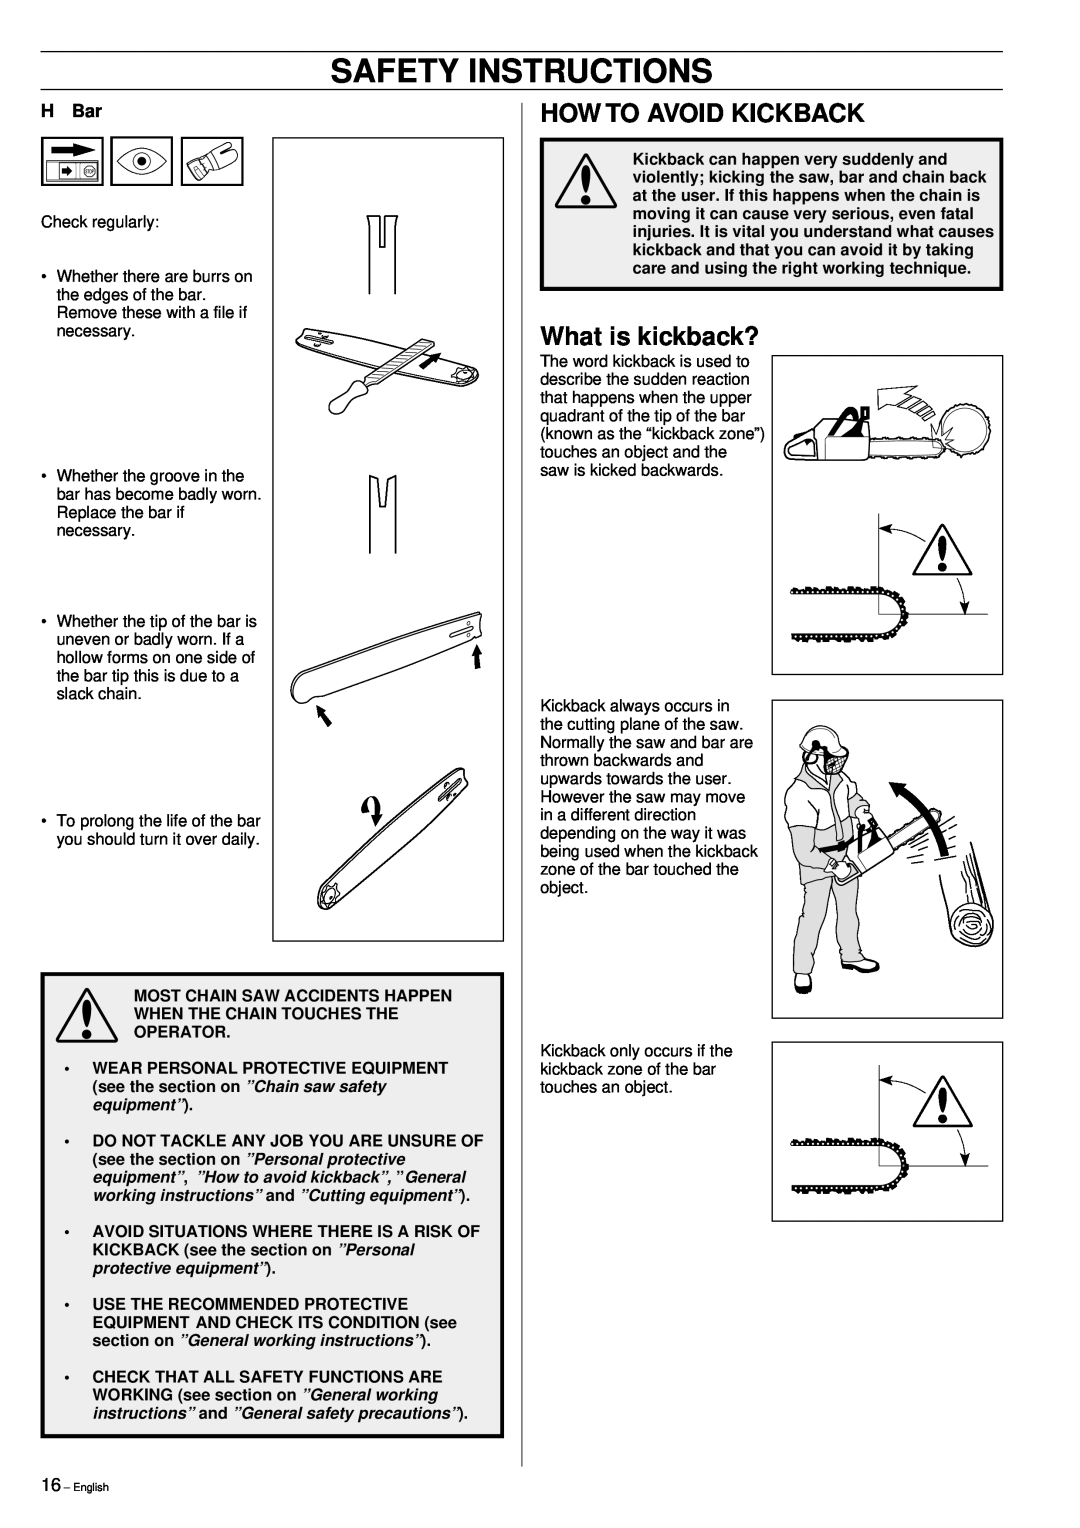 Husqvarna 395XP manual Safety Instructions, How To Avoid Kickback, What is kickback?, H Bar 